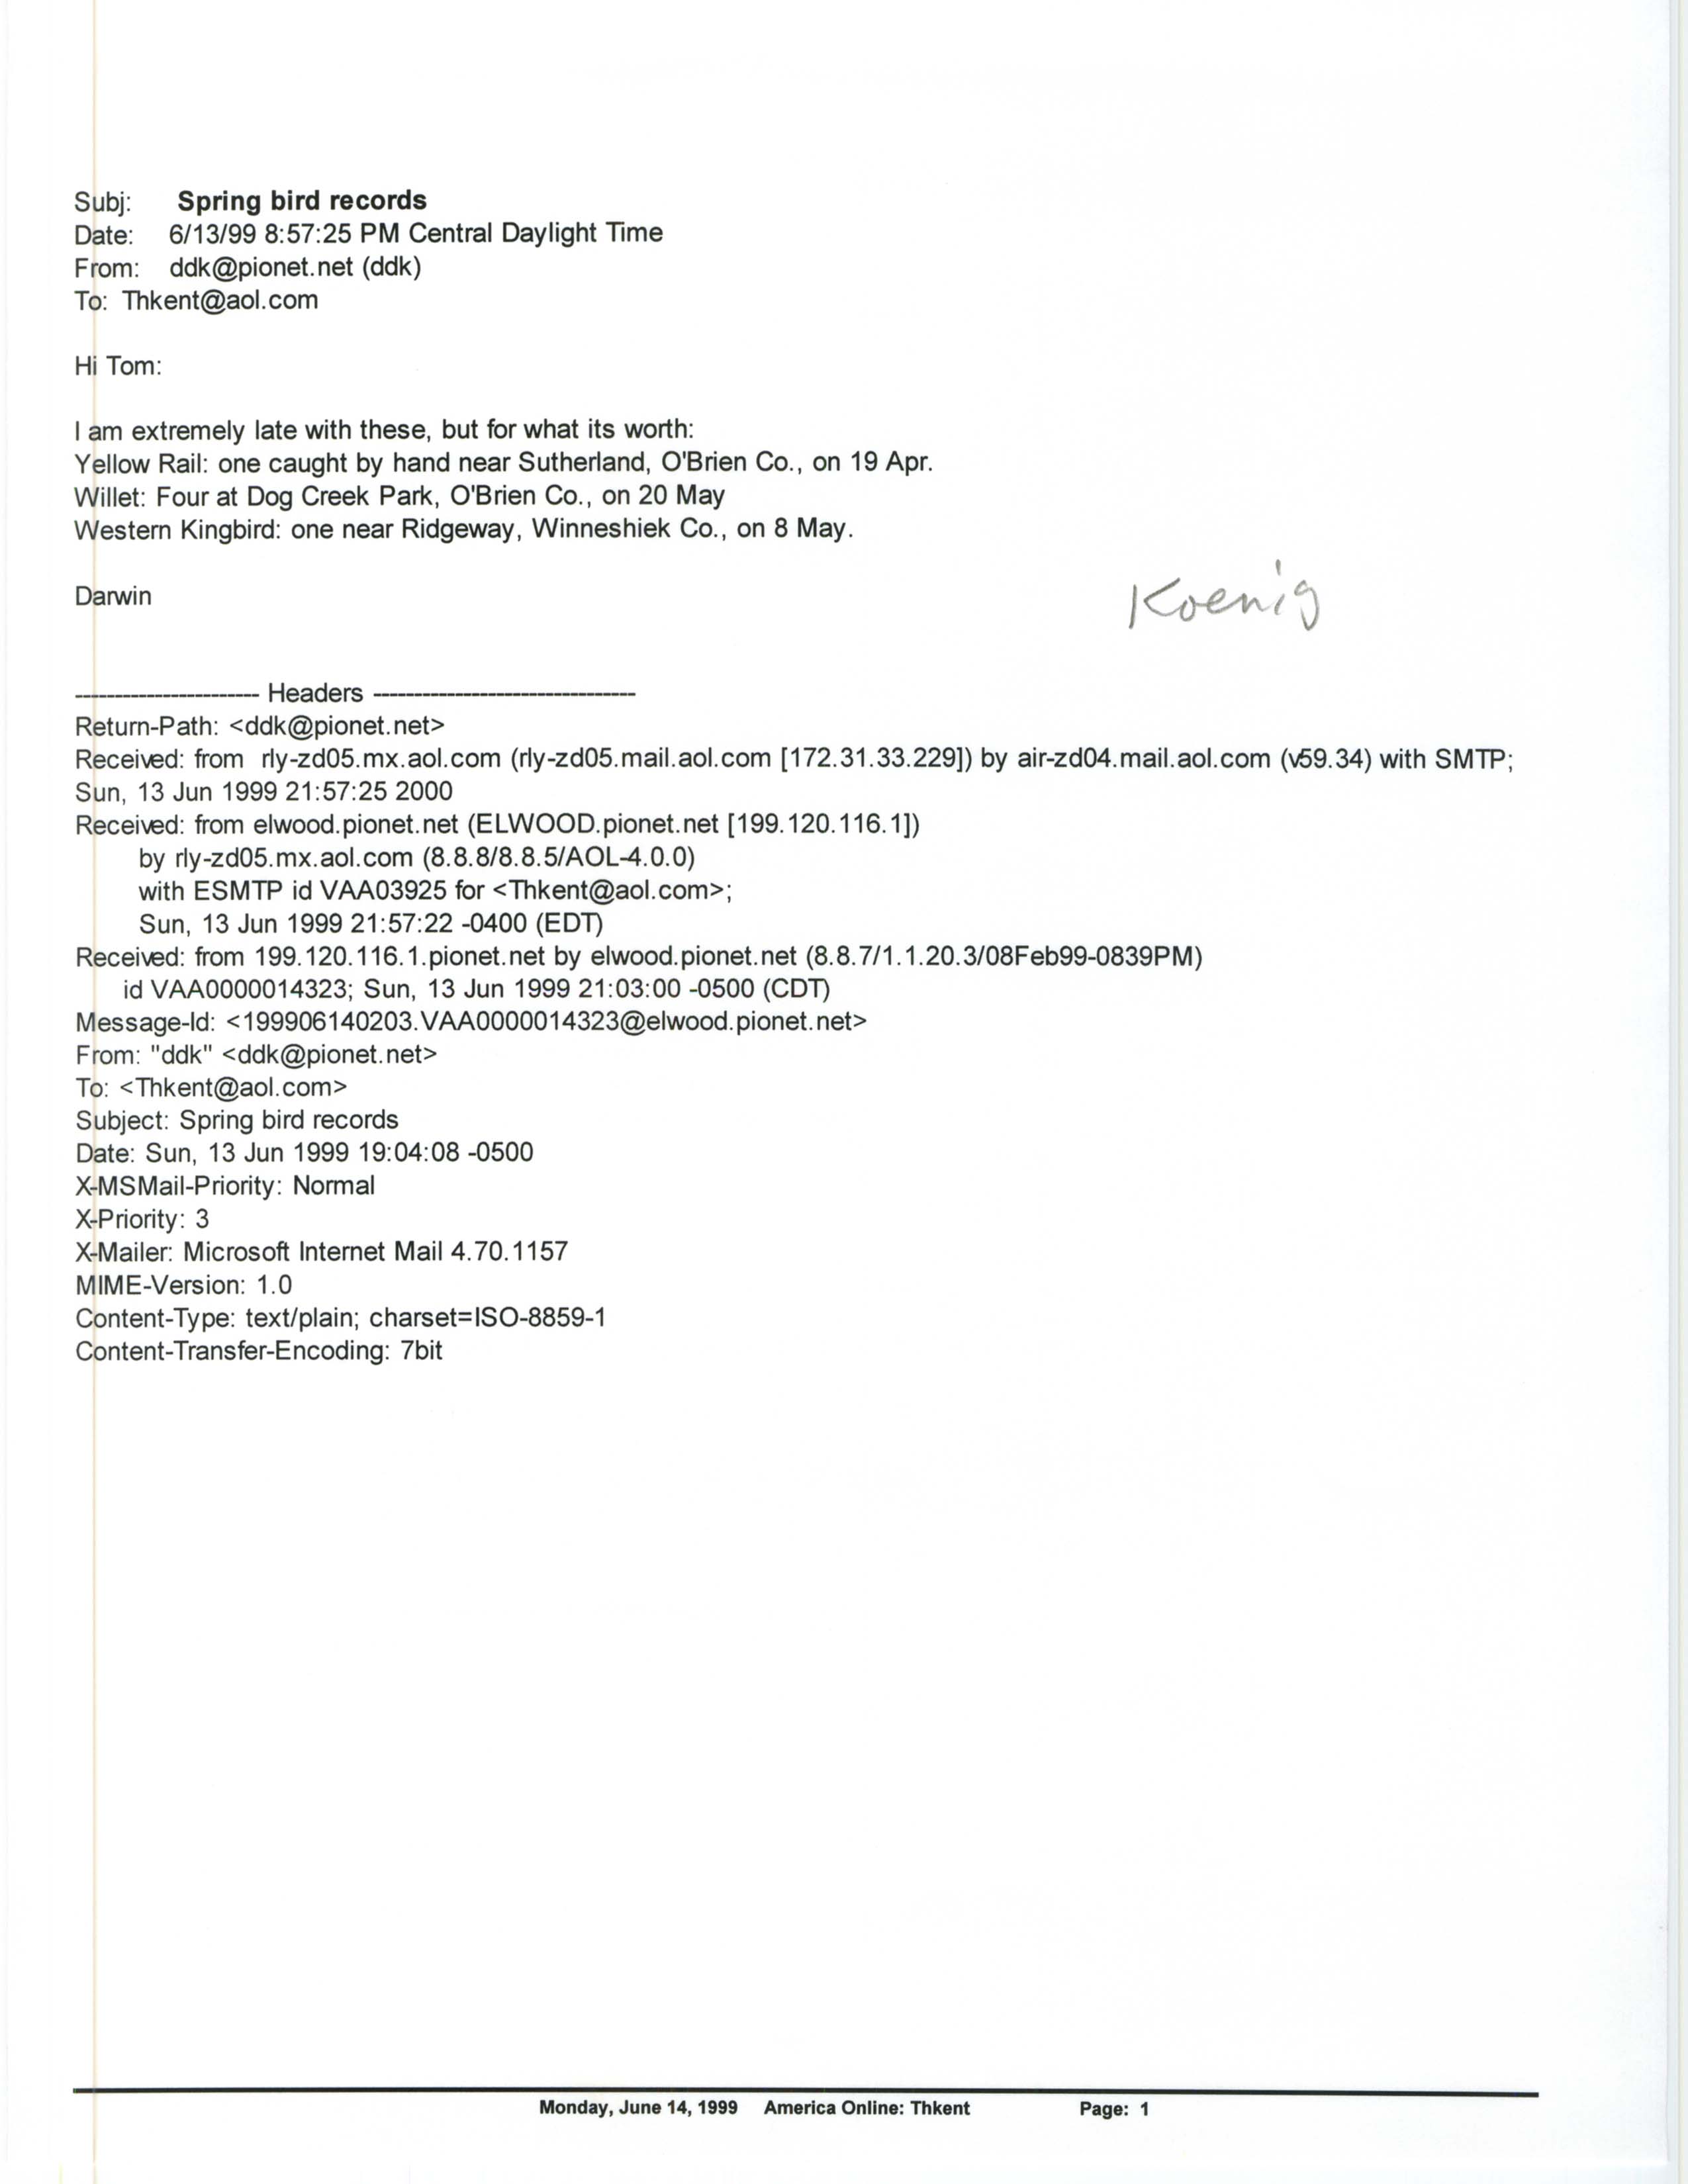 Darwin Koenig email to Thomas Kent regarding spring bird records, June 13, 1999